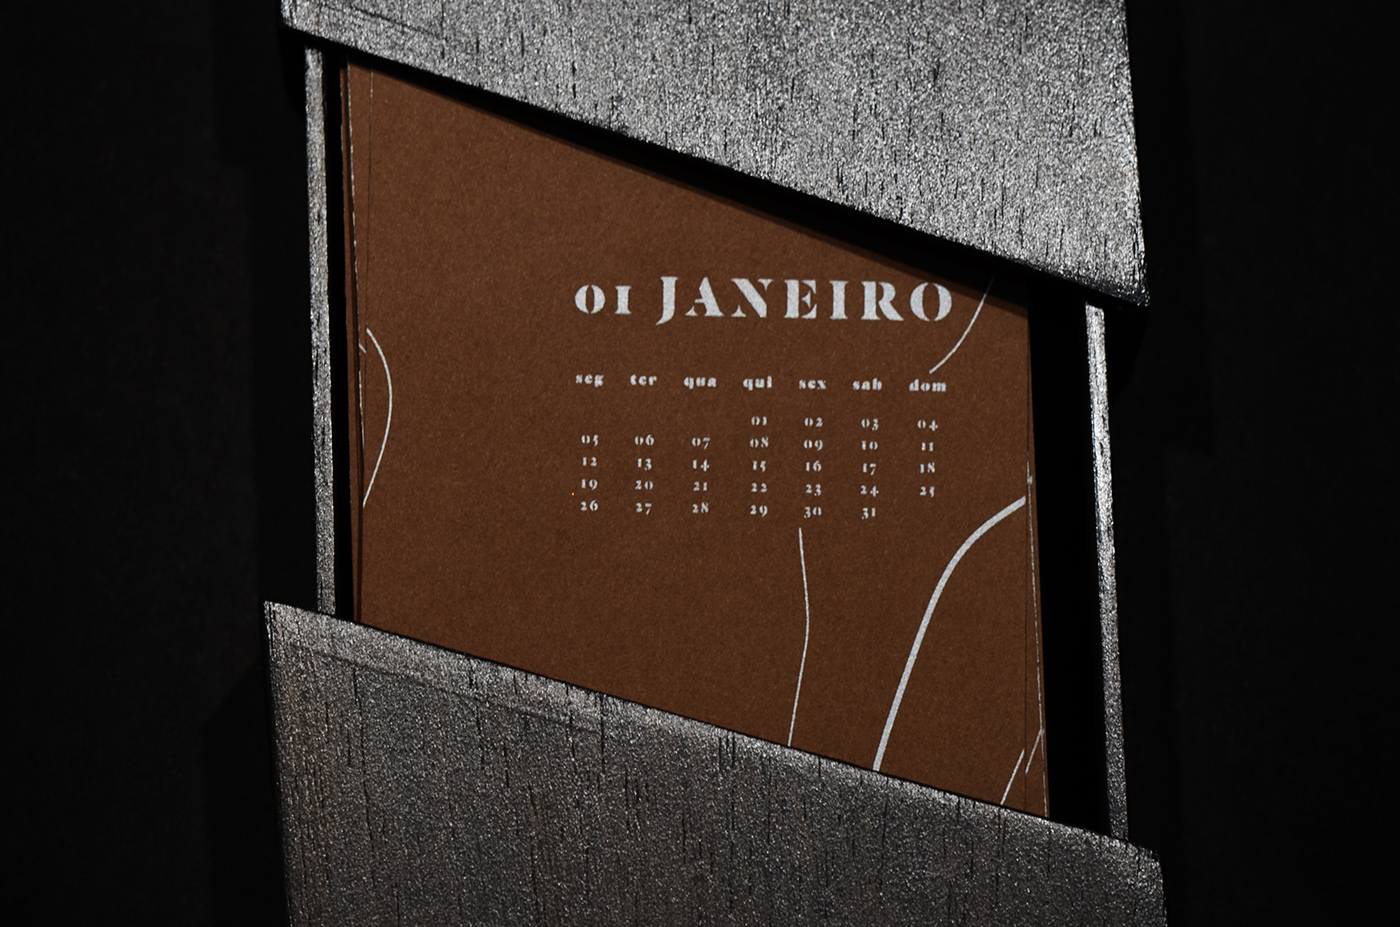 ramos pinto Topografia Douro OportoWine gold serigrafia silver paint textures cards calendar Topographic metalic copper